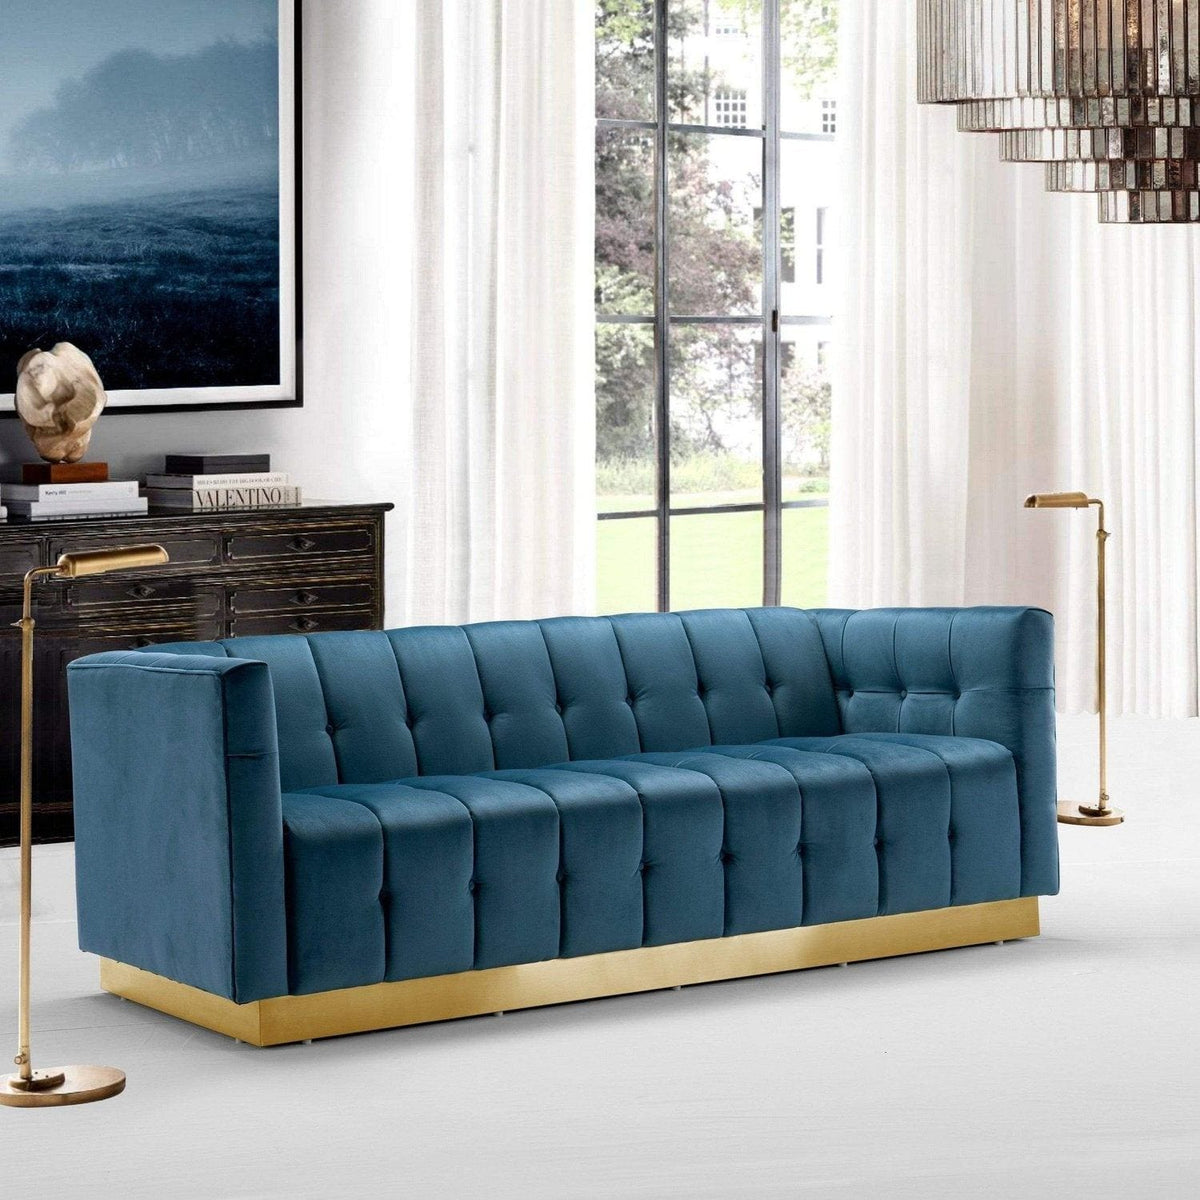 Iconic Home Primavera Velvet Sofa Button Tufted Upholstered Design Teal